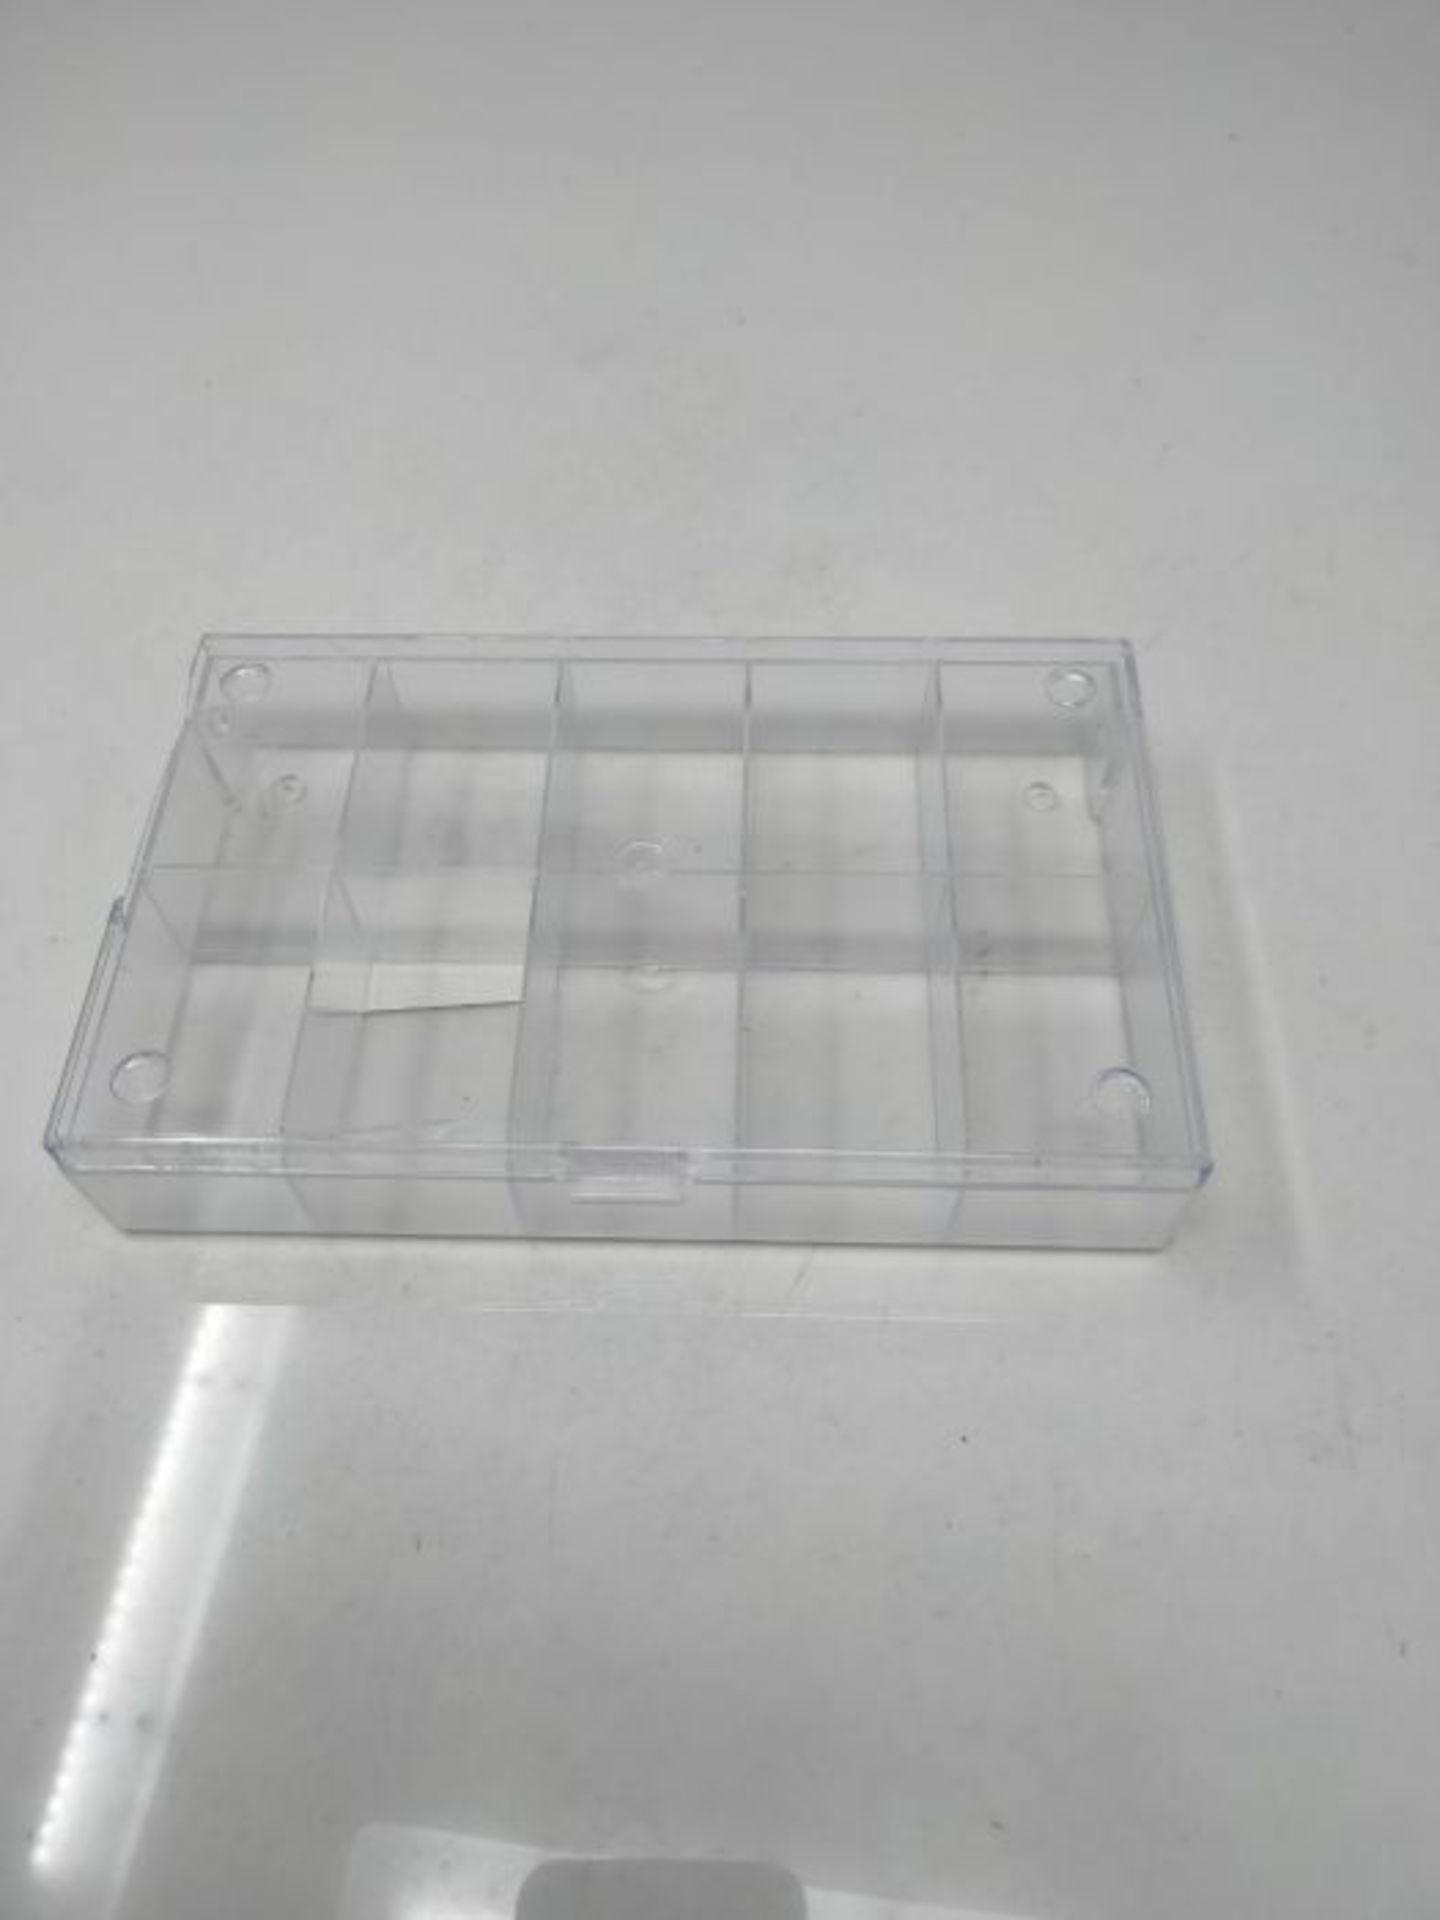 Hipner dowel assortment box (L x W x H) 164 x 31 x 101 mm, number of compartments: 10 - Image 2 of 2